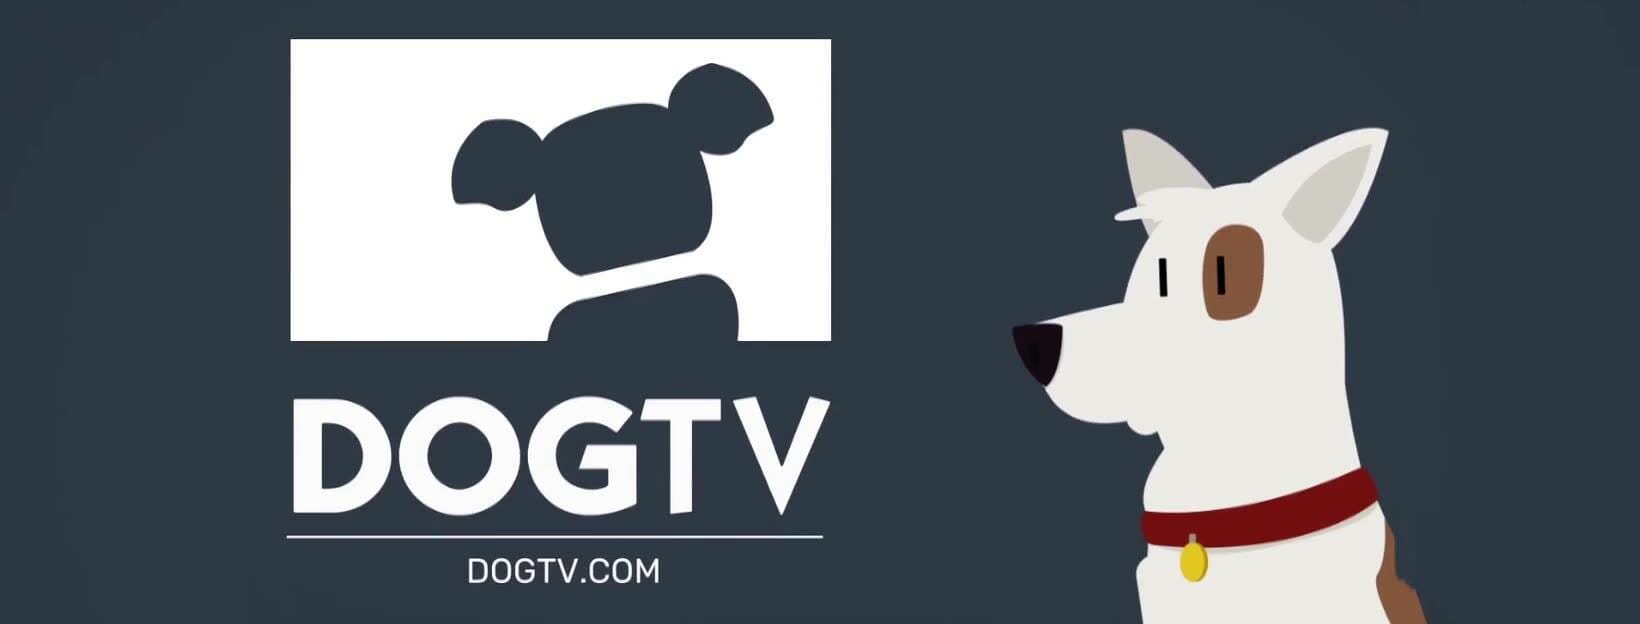 DOGTV logo with cartoon dog